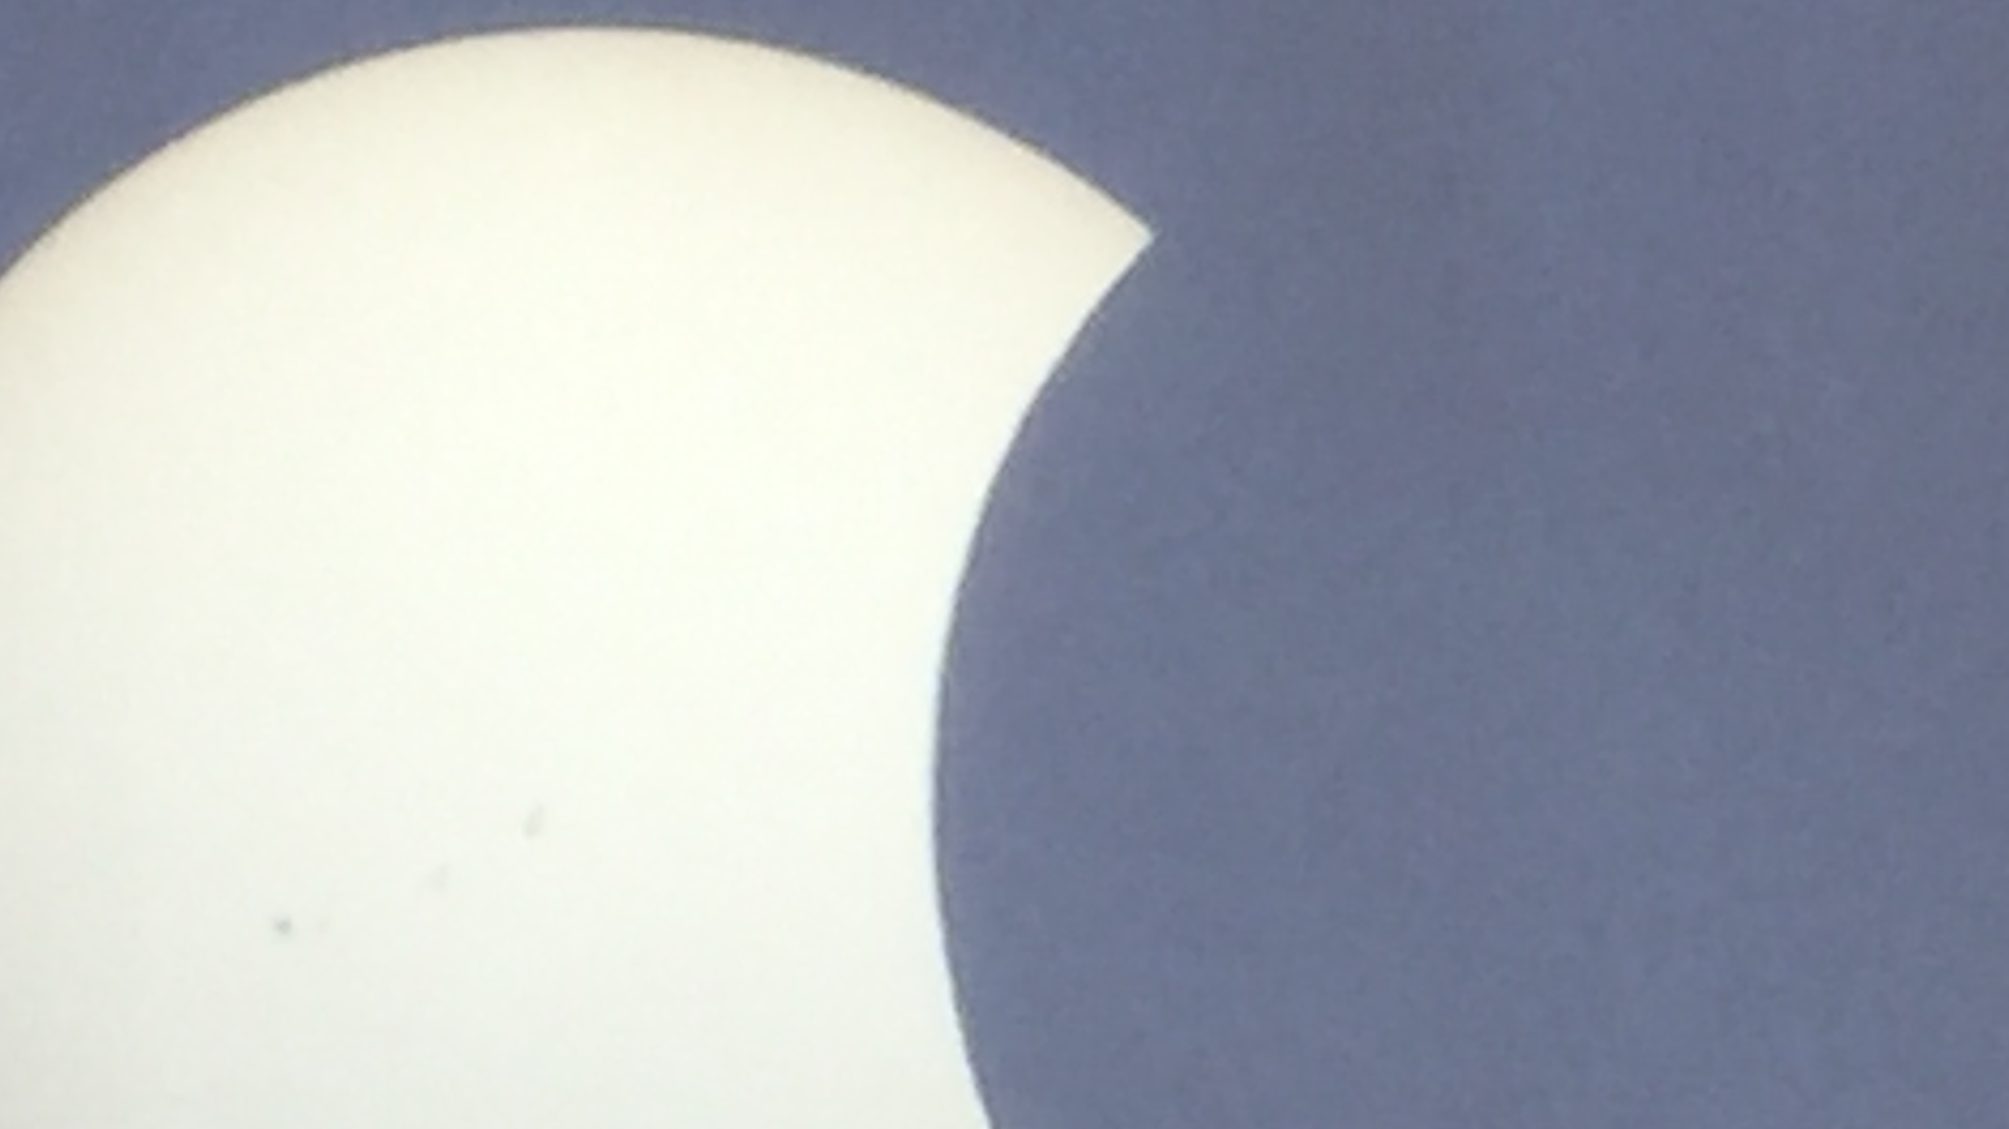 Partial Solar Eclipse at Sunrise June 10